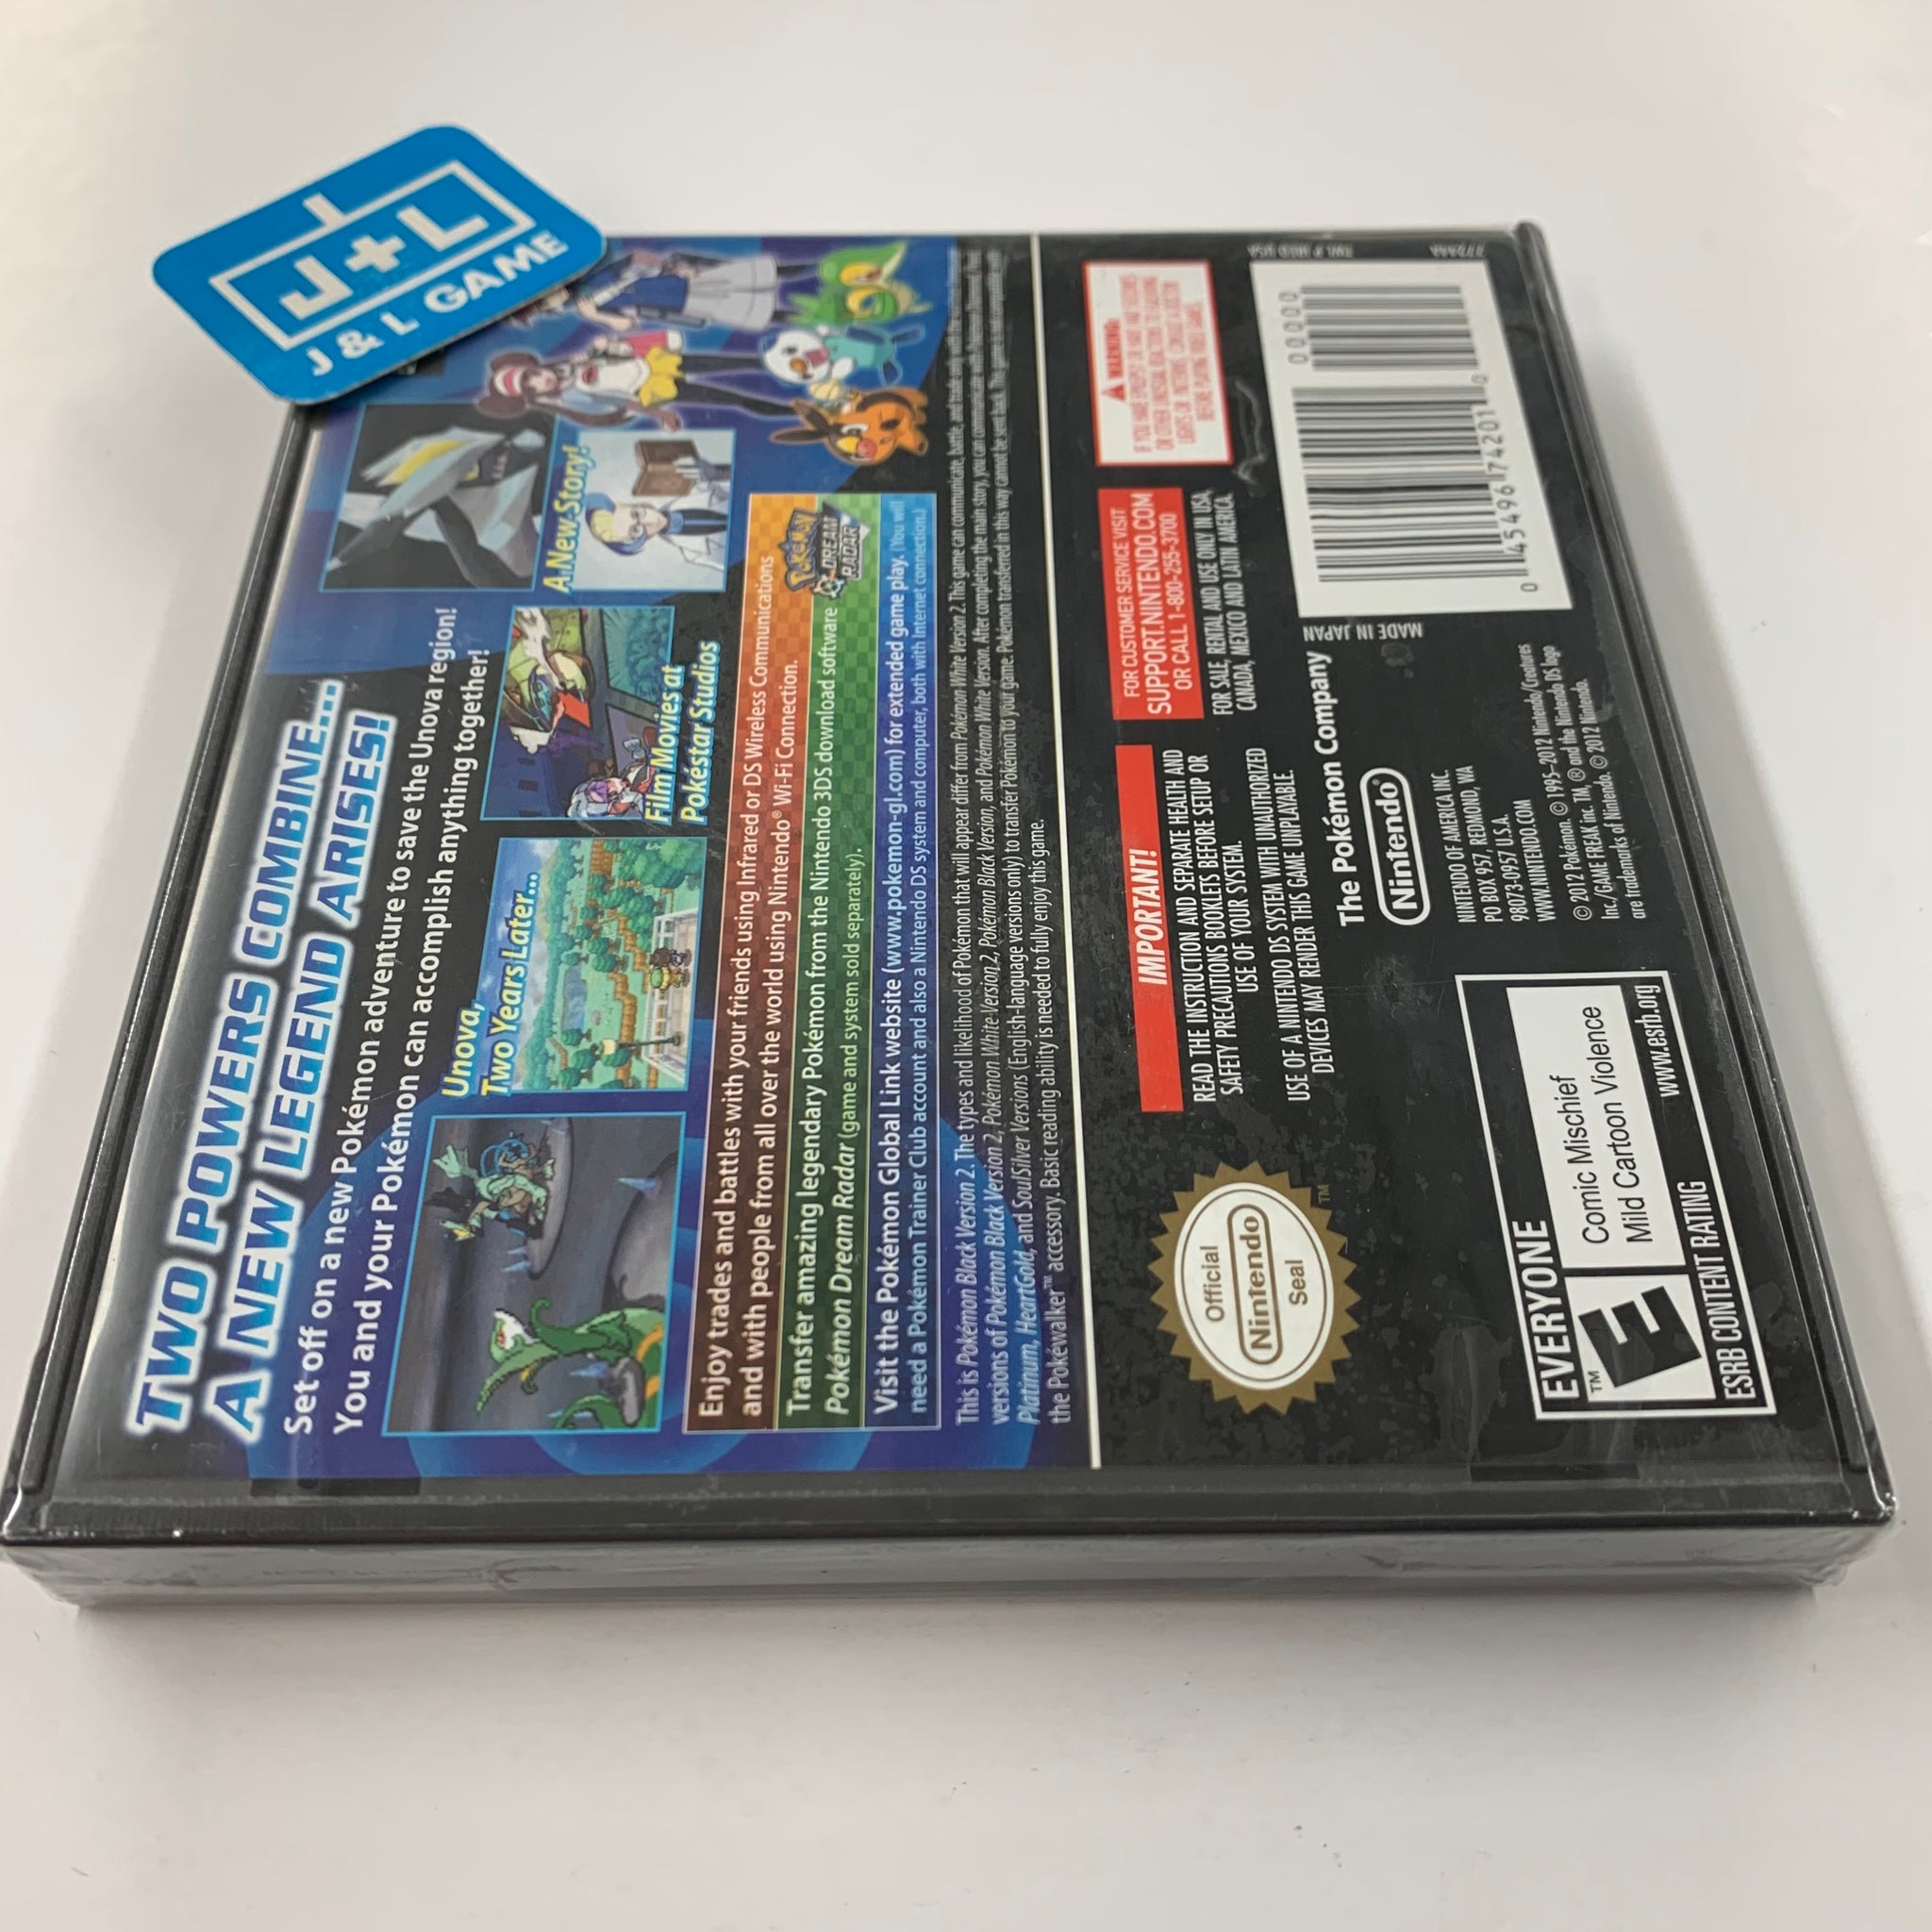 Pokemon Black Version 2 - Nintendo DS – J&L Video Games New York City